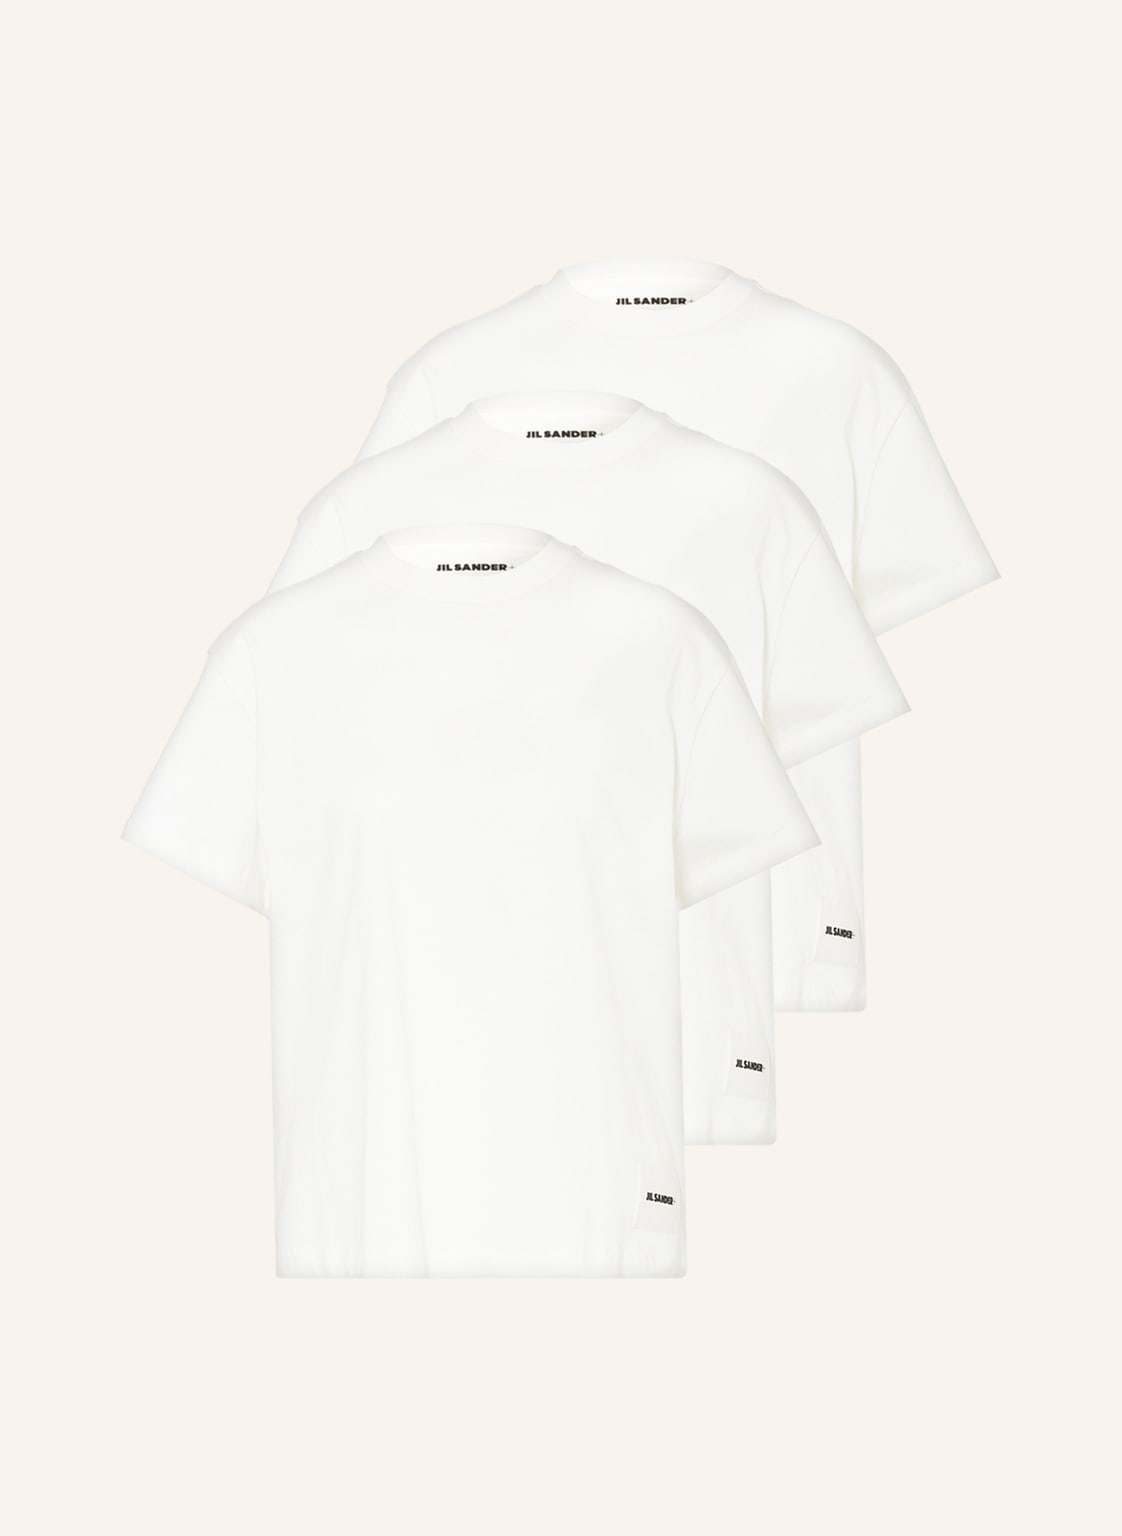 Jil Sander 3er-Pack T-Shirts weiss von Jil Sander